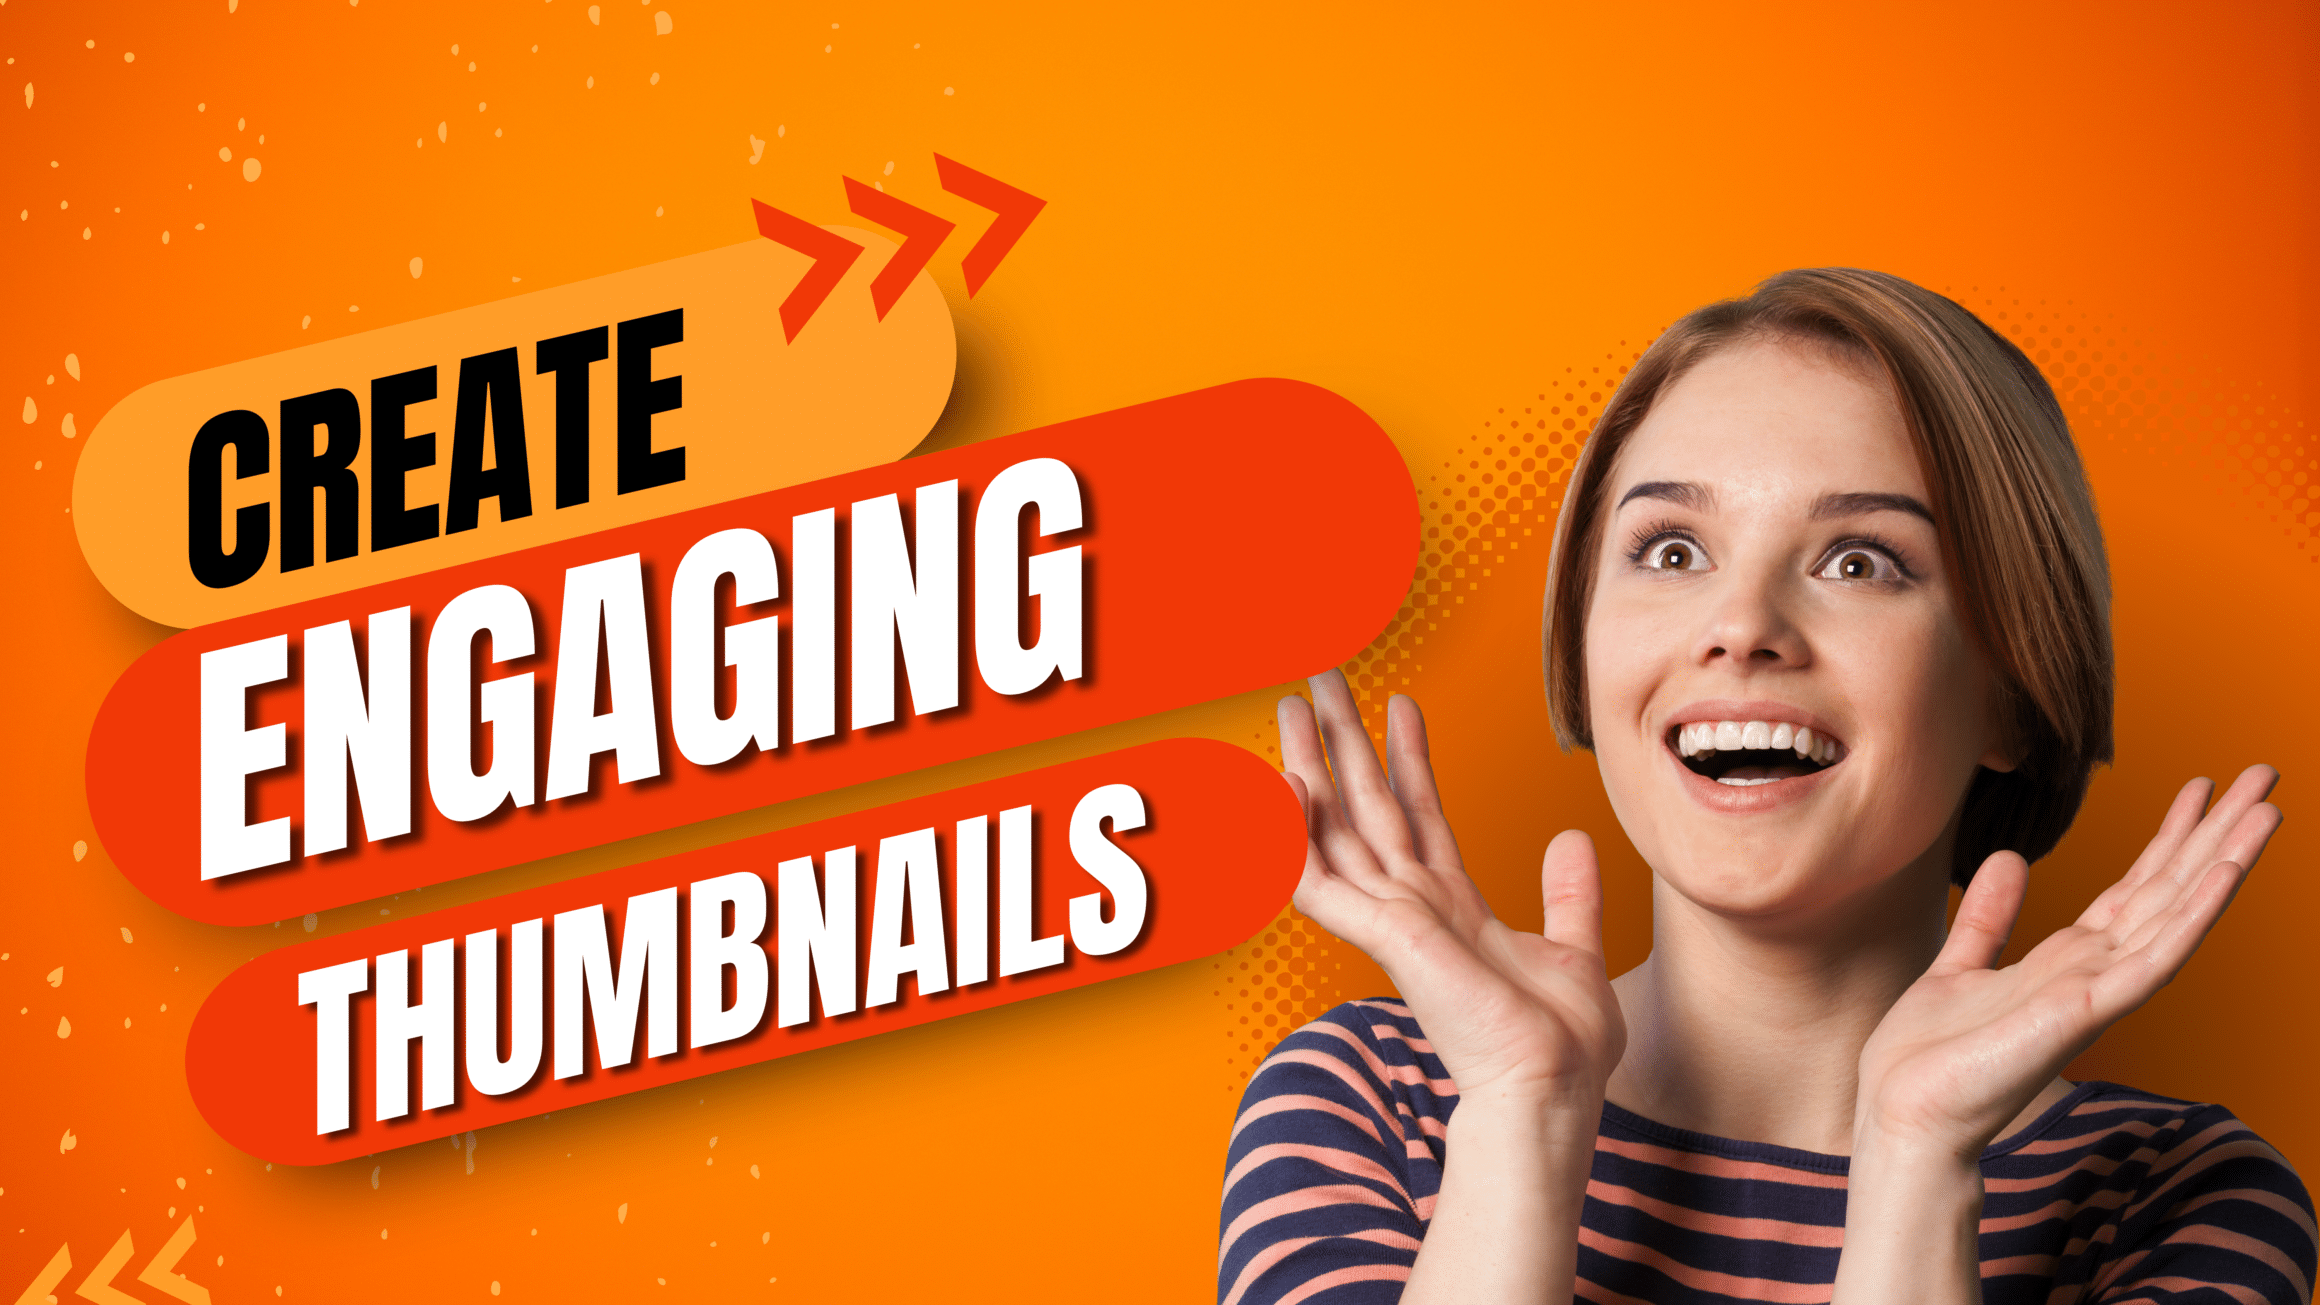 Create Engaging Thumbnails